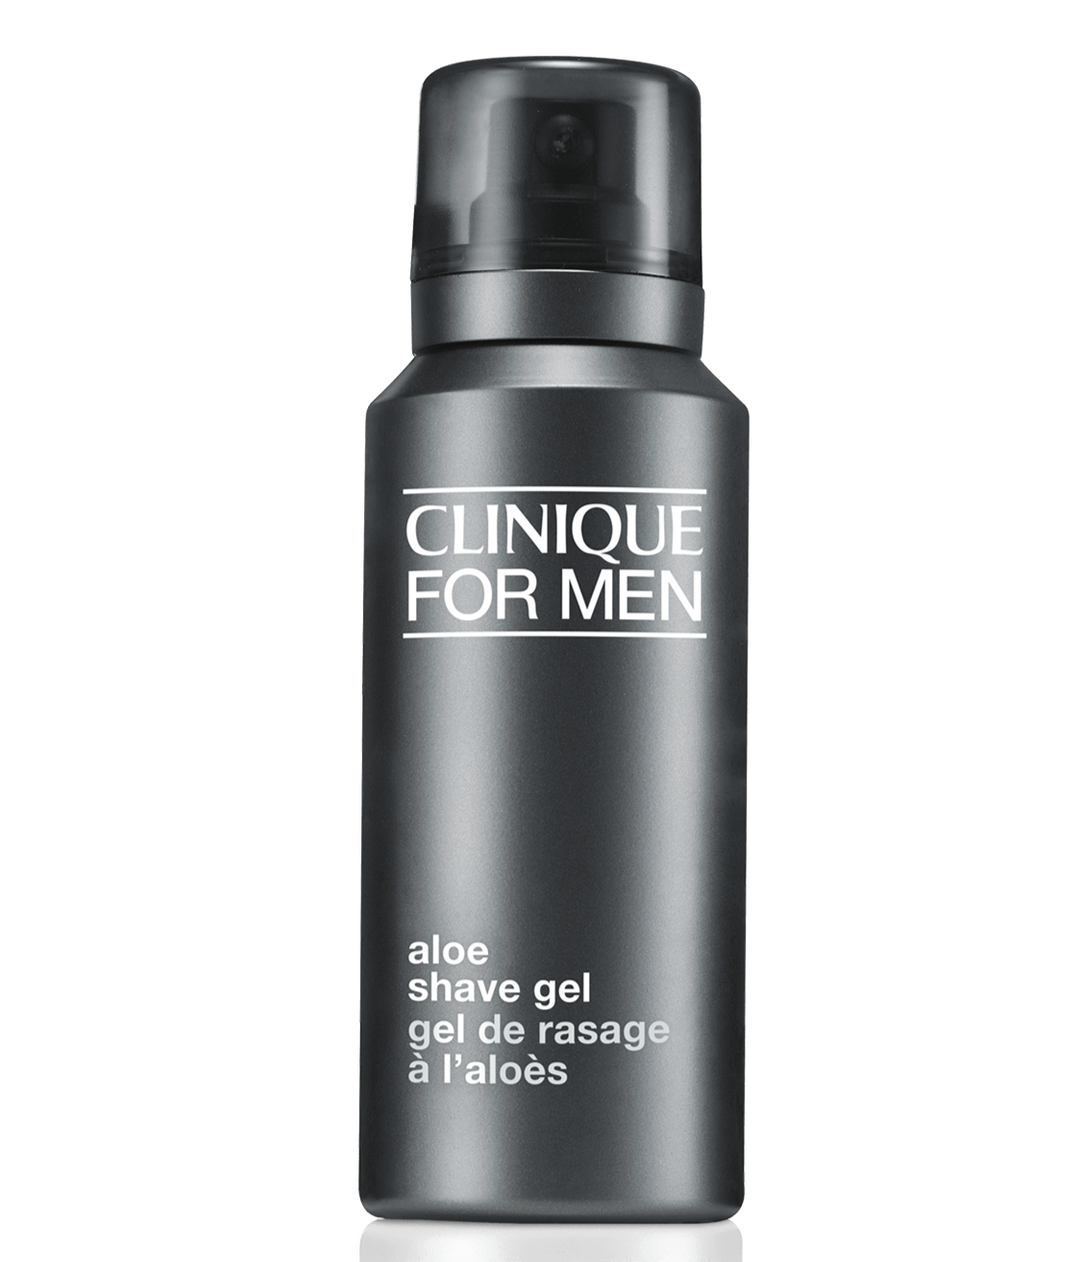 Clinique For Men™ Aloe Shave Gel.